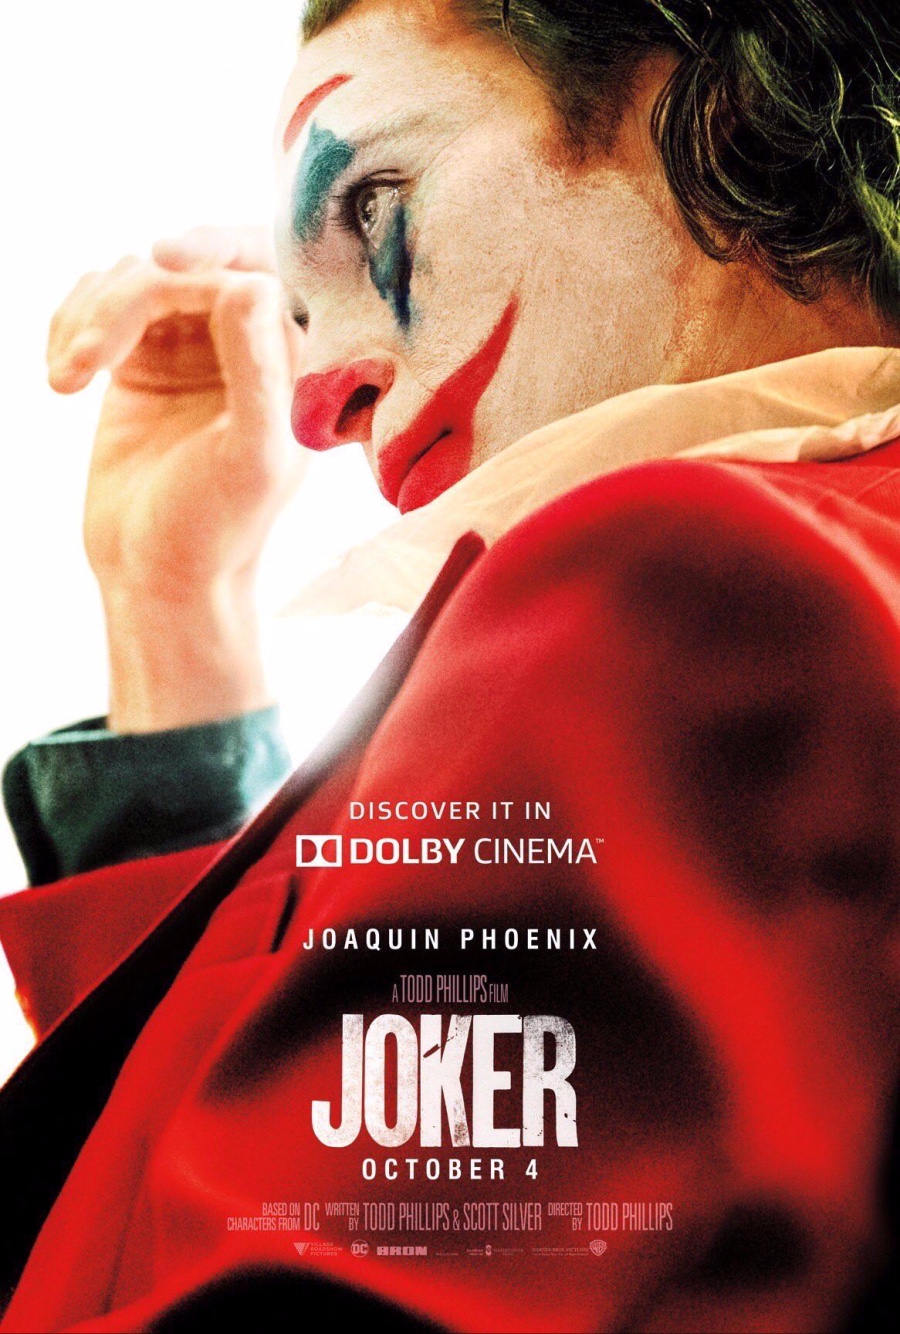 joker-tickets-poster-2.jpg